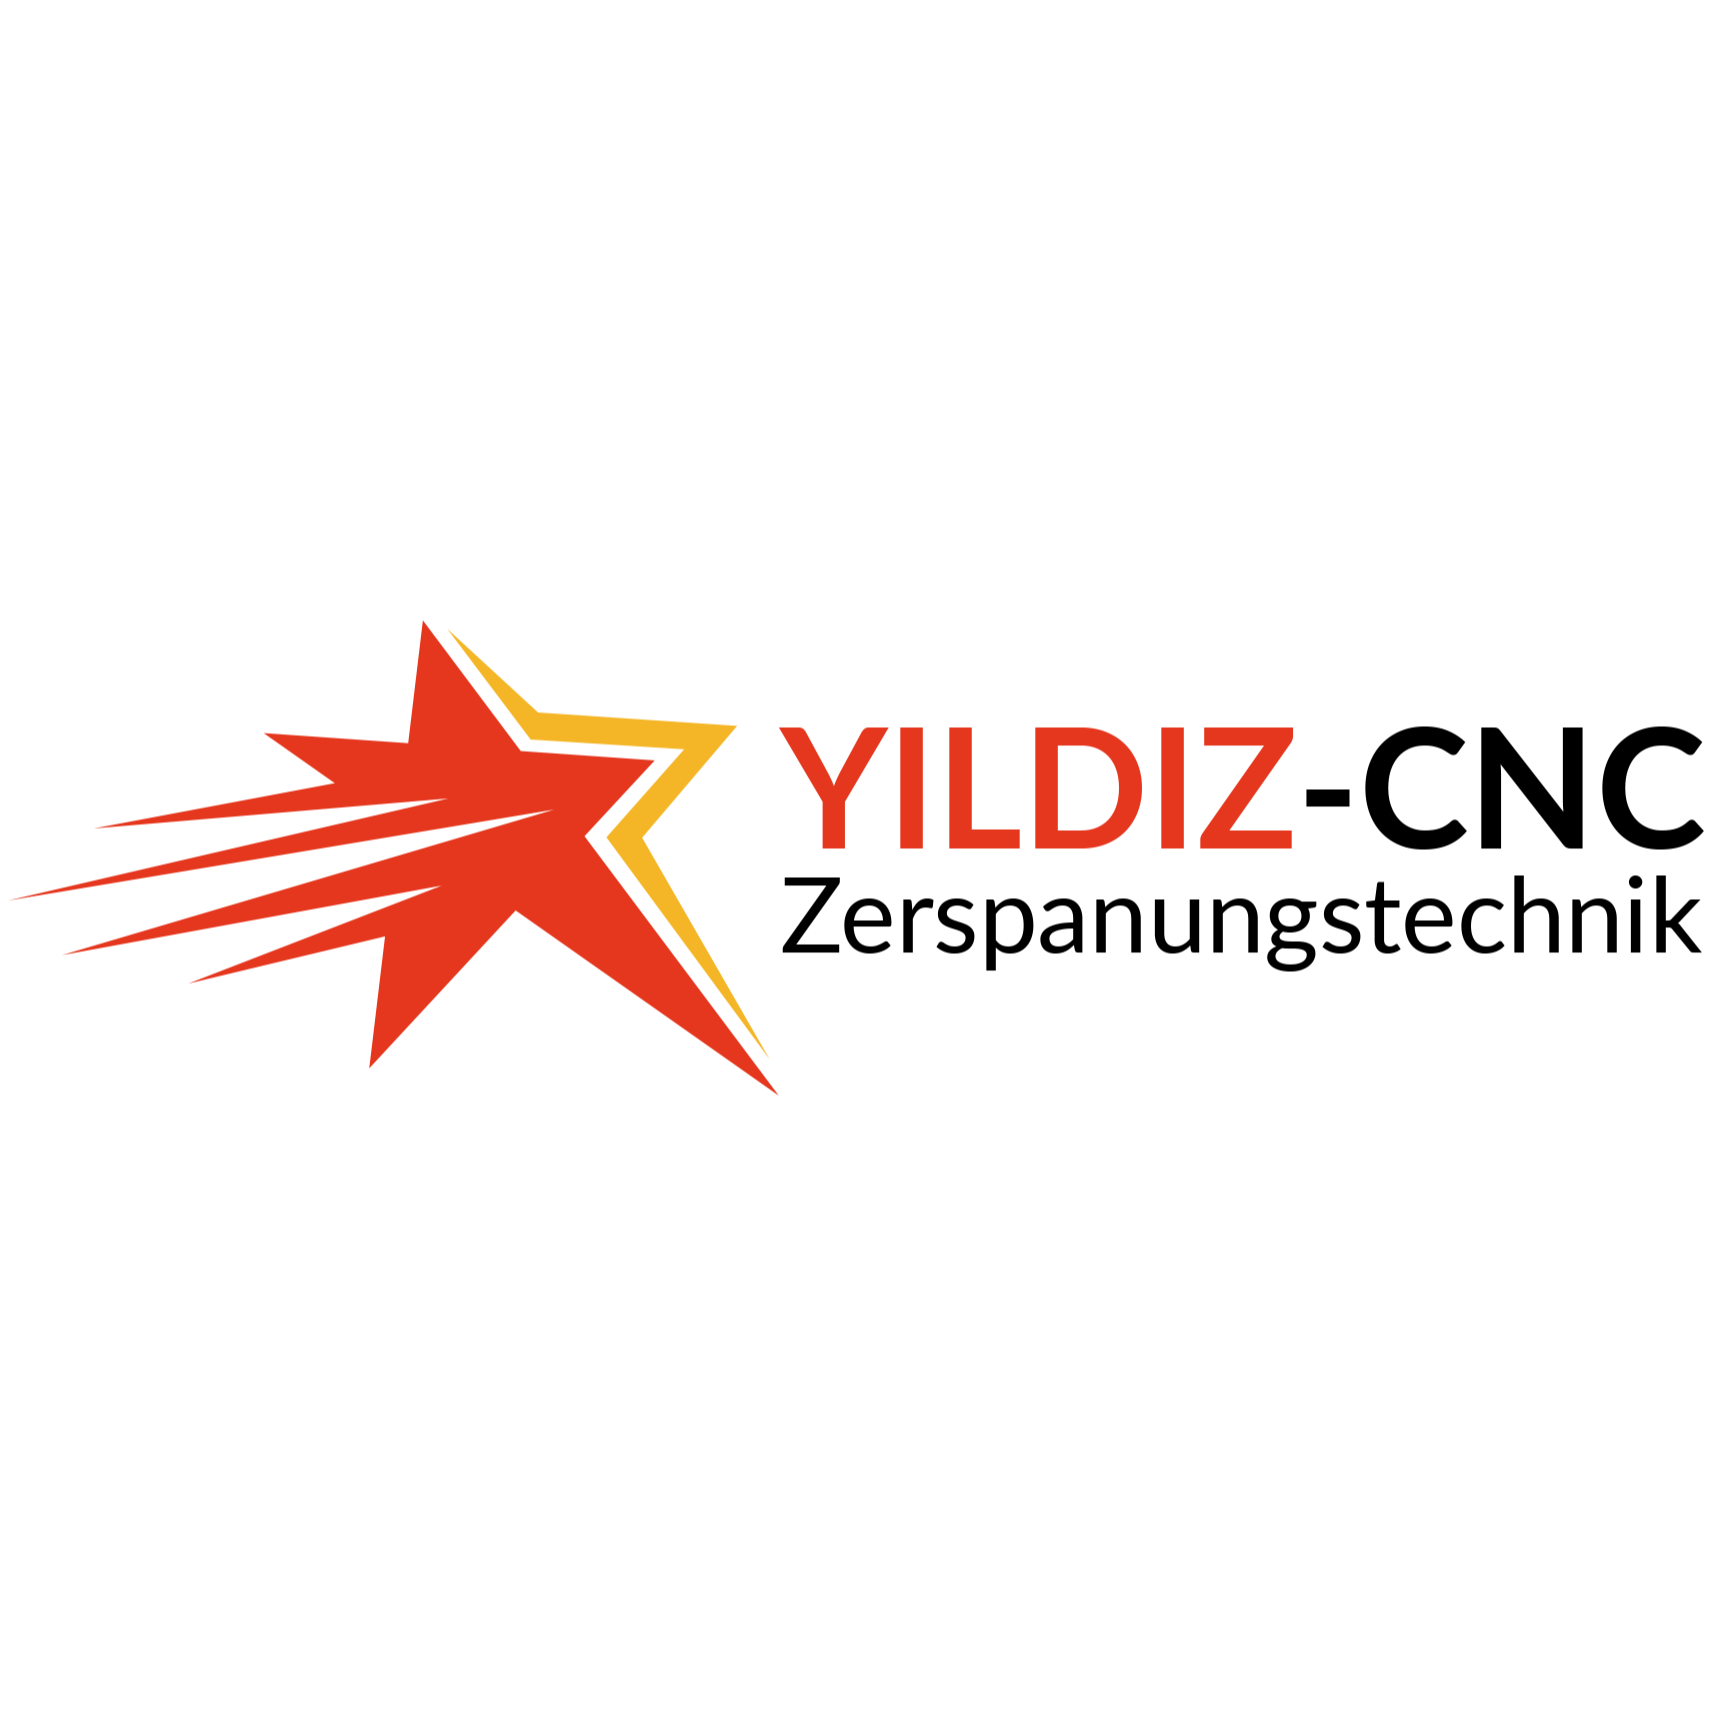 Yildiz-CNC Zerspanungstechnik in Hüttenberg Hessen - Drehtechnik Frästechnik Baugruppen Kleinserien Prototypen